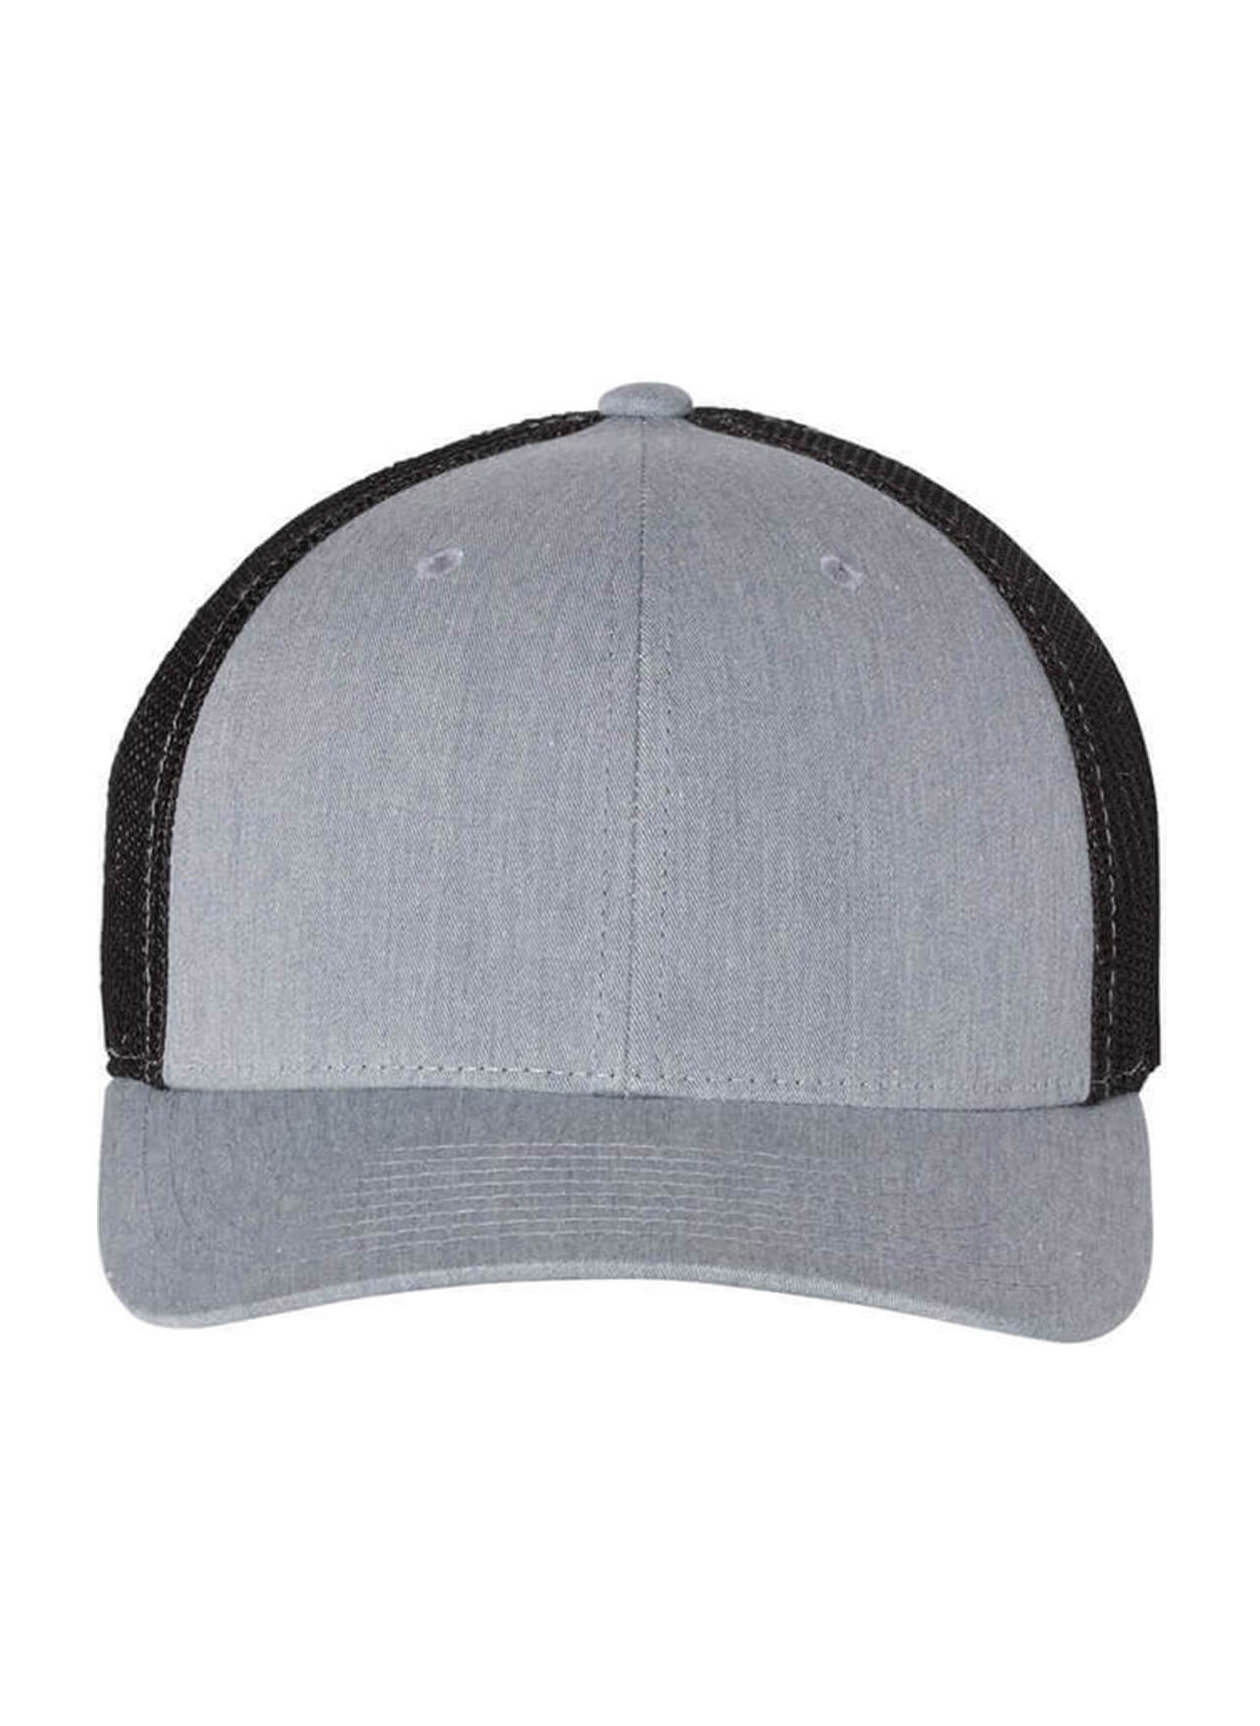 / Richardson Trucker R-Flex Richardson Heather Black | With Grey Fitted Hat